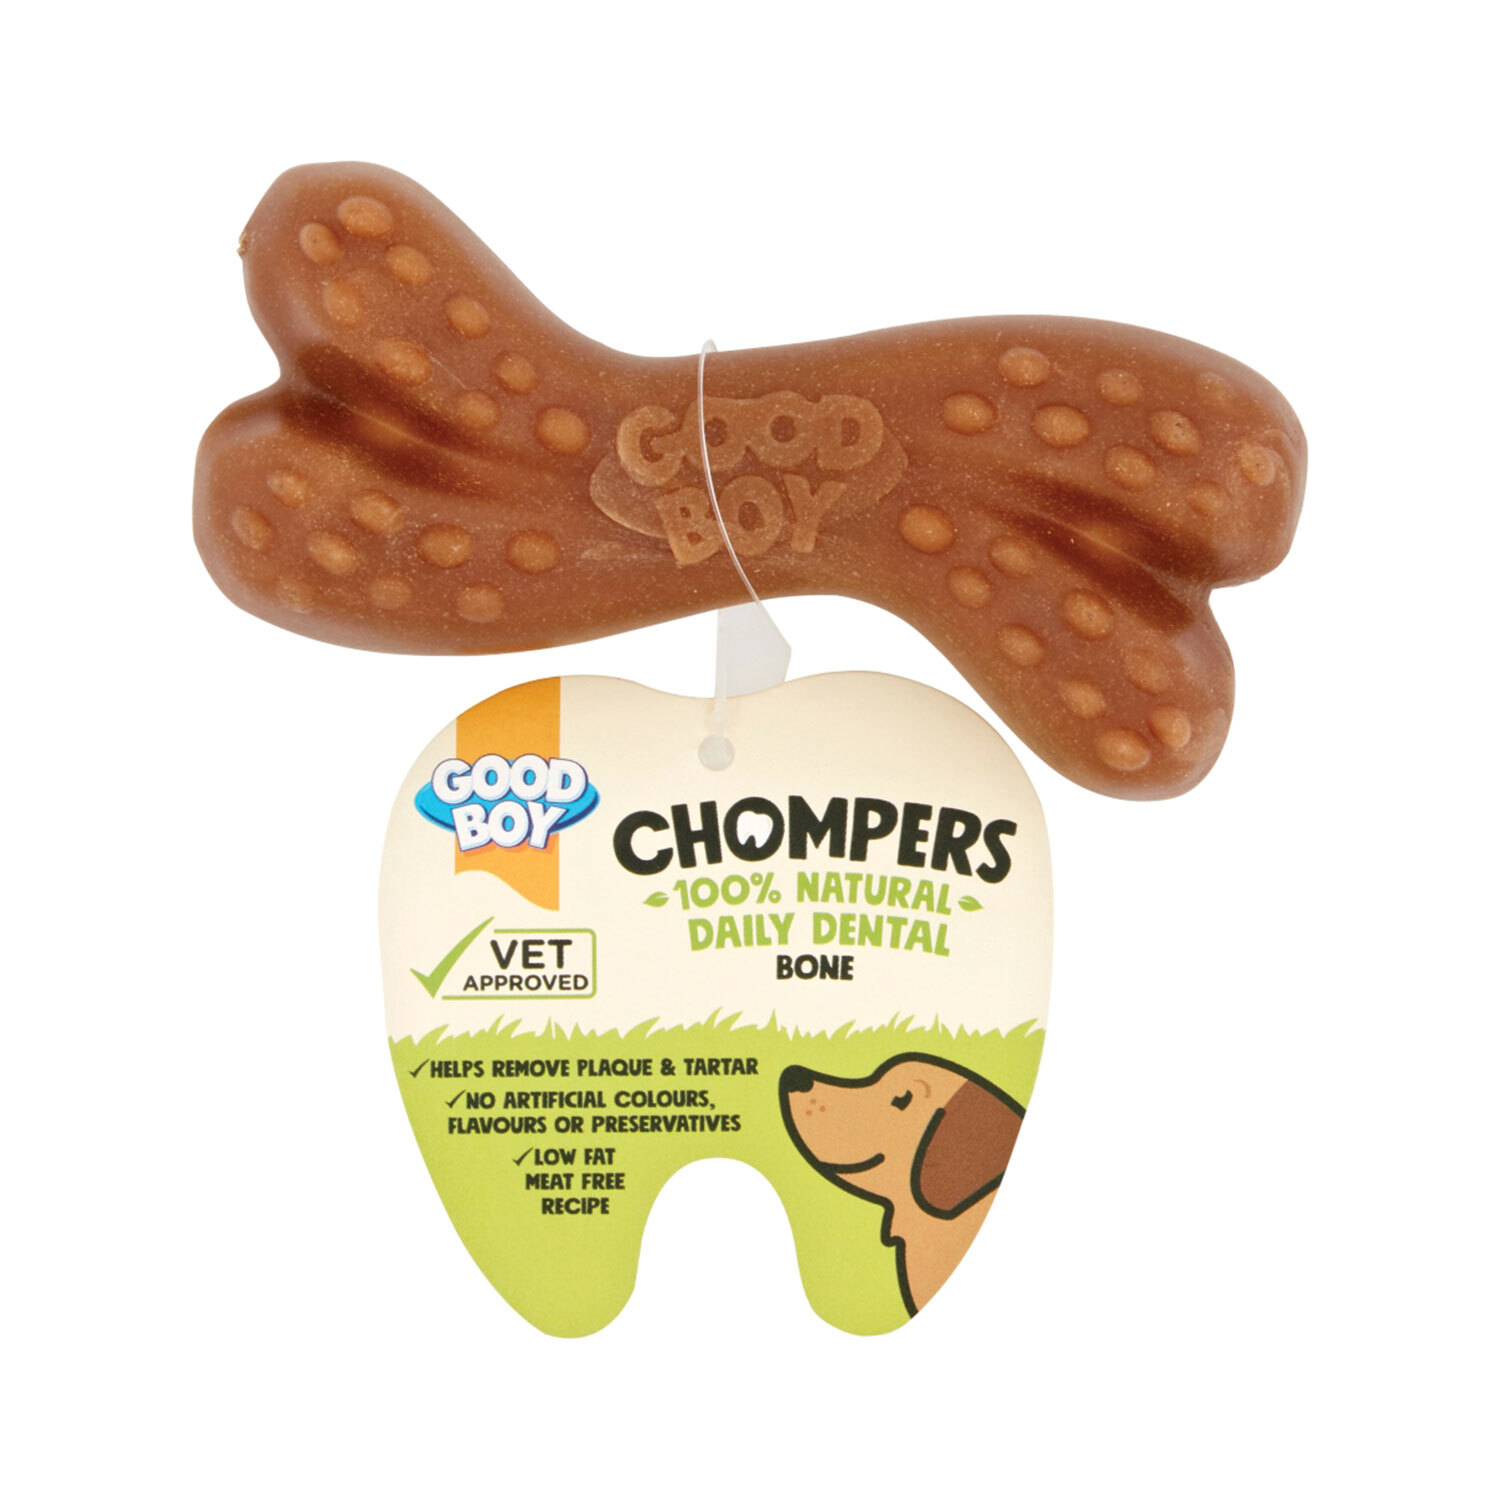 Good Boy Chompers Dental Bone Dog Treat 60g Image 1